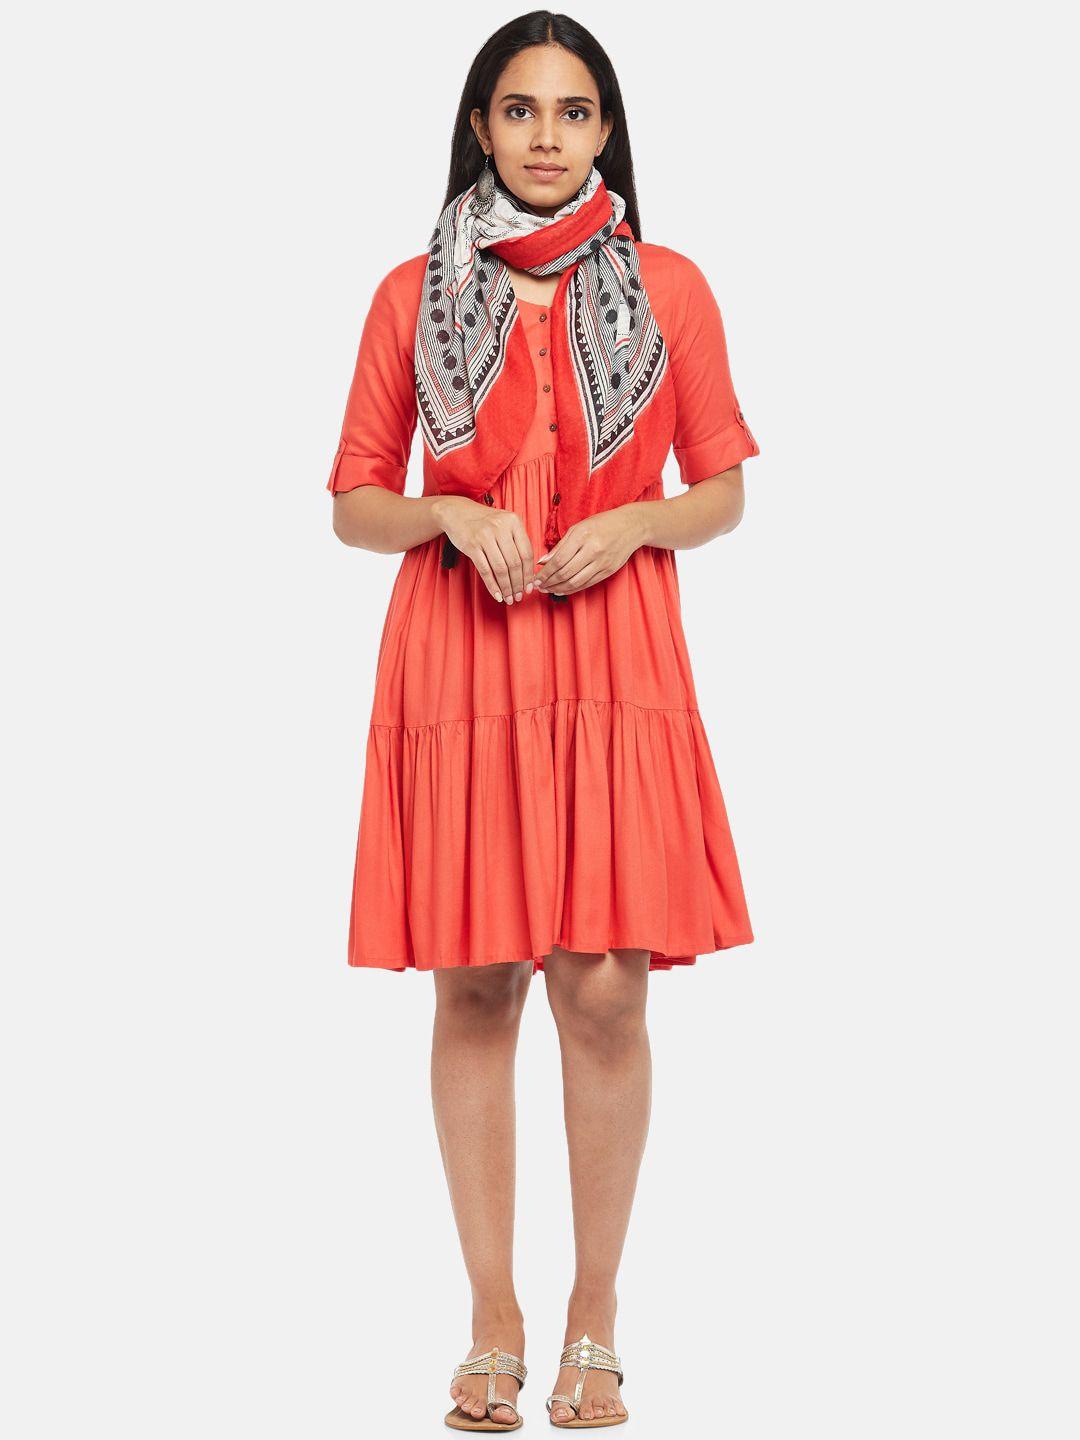 akkriti by pantaloons woman coral dress